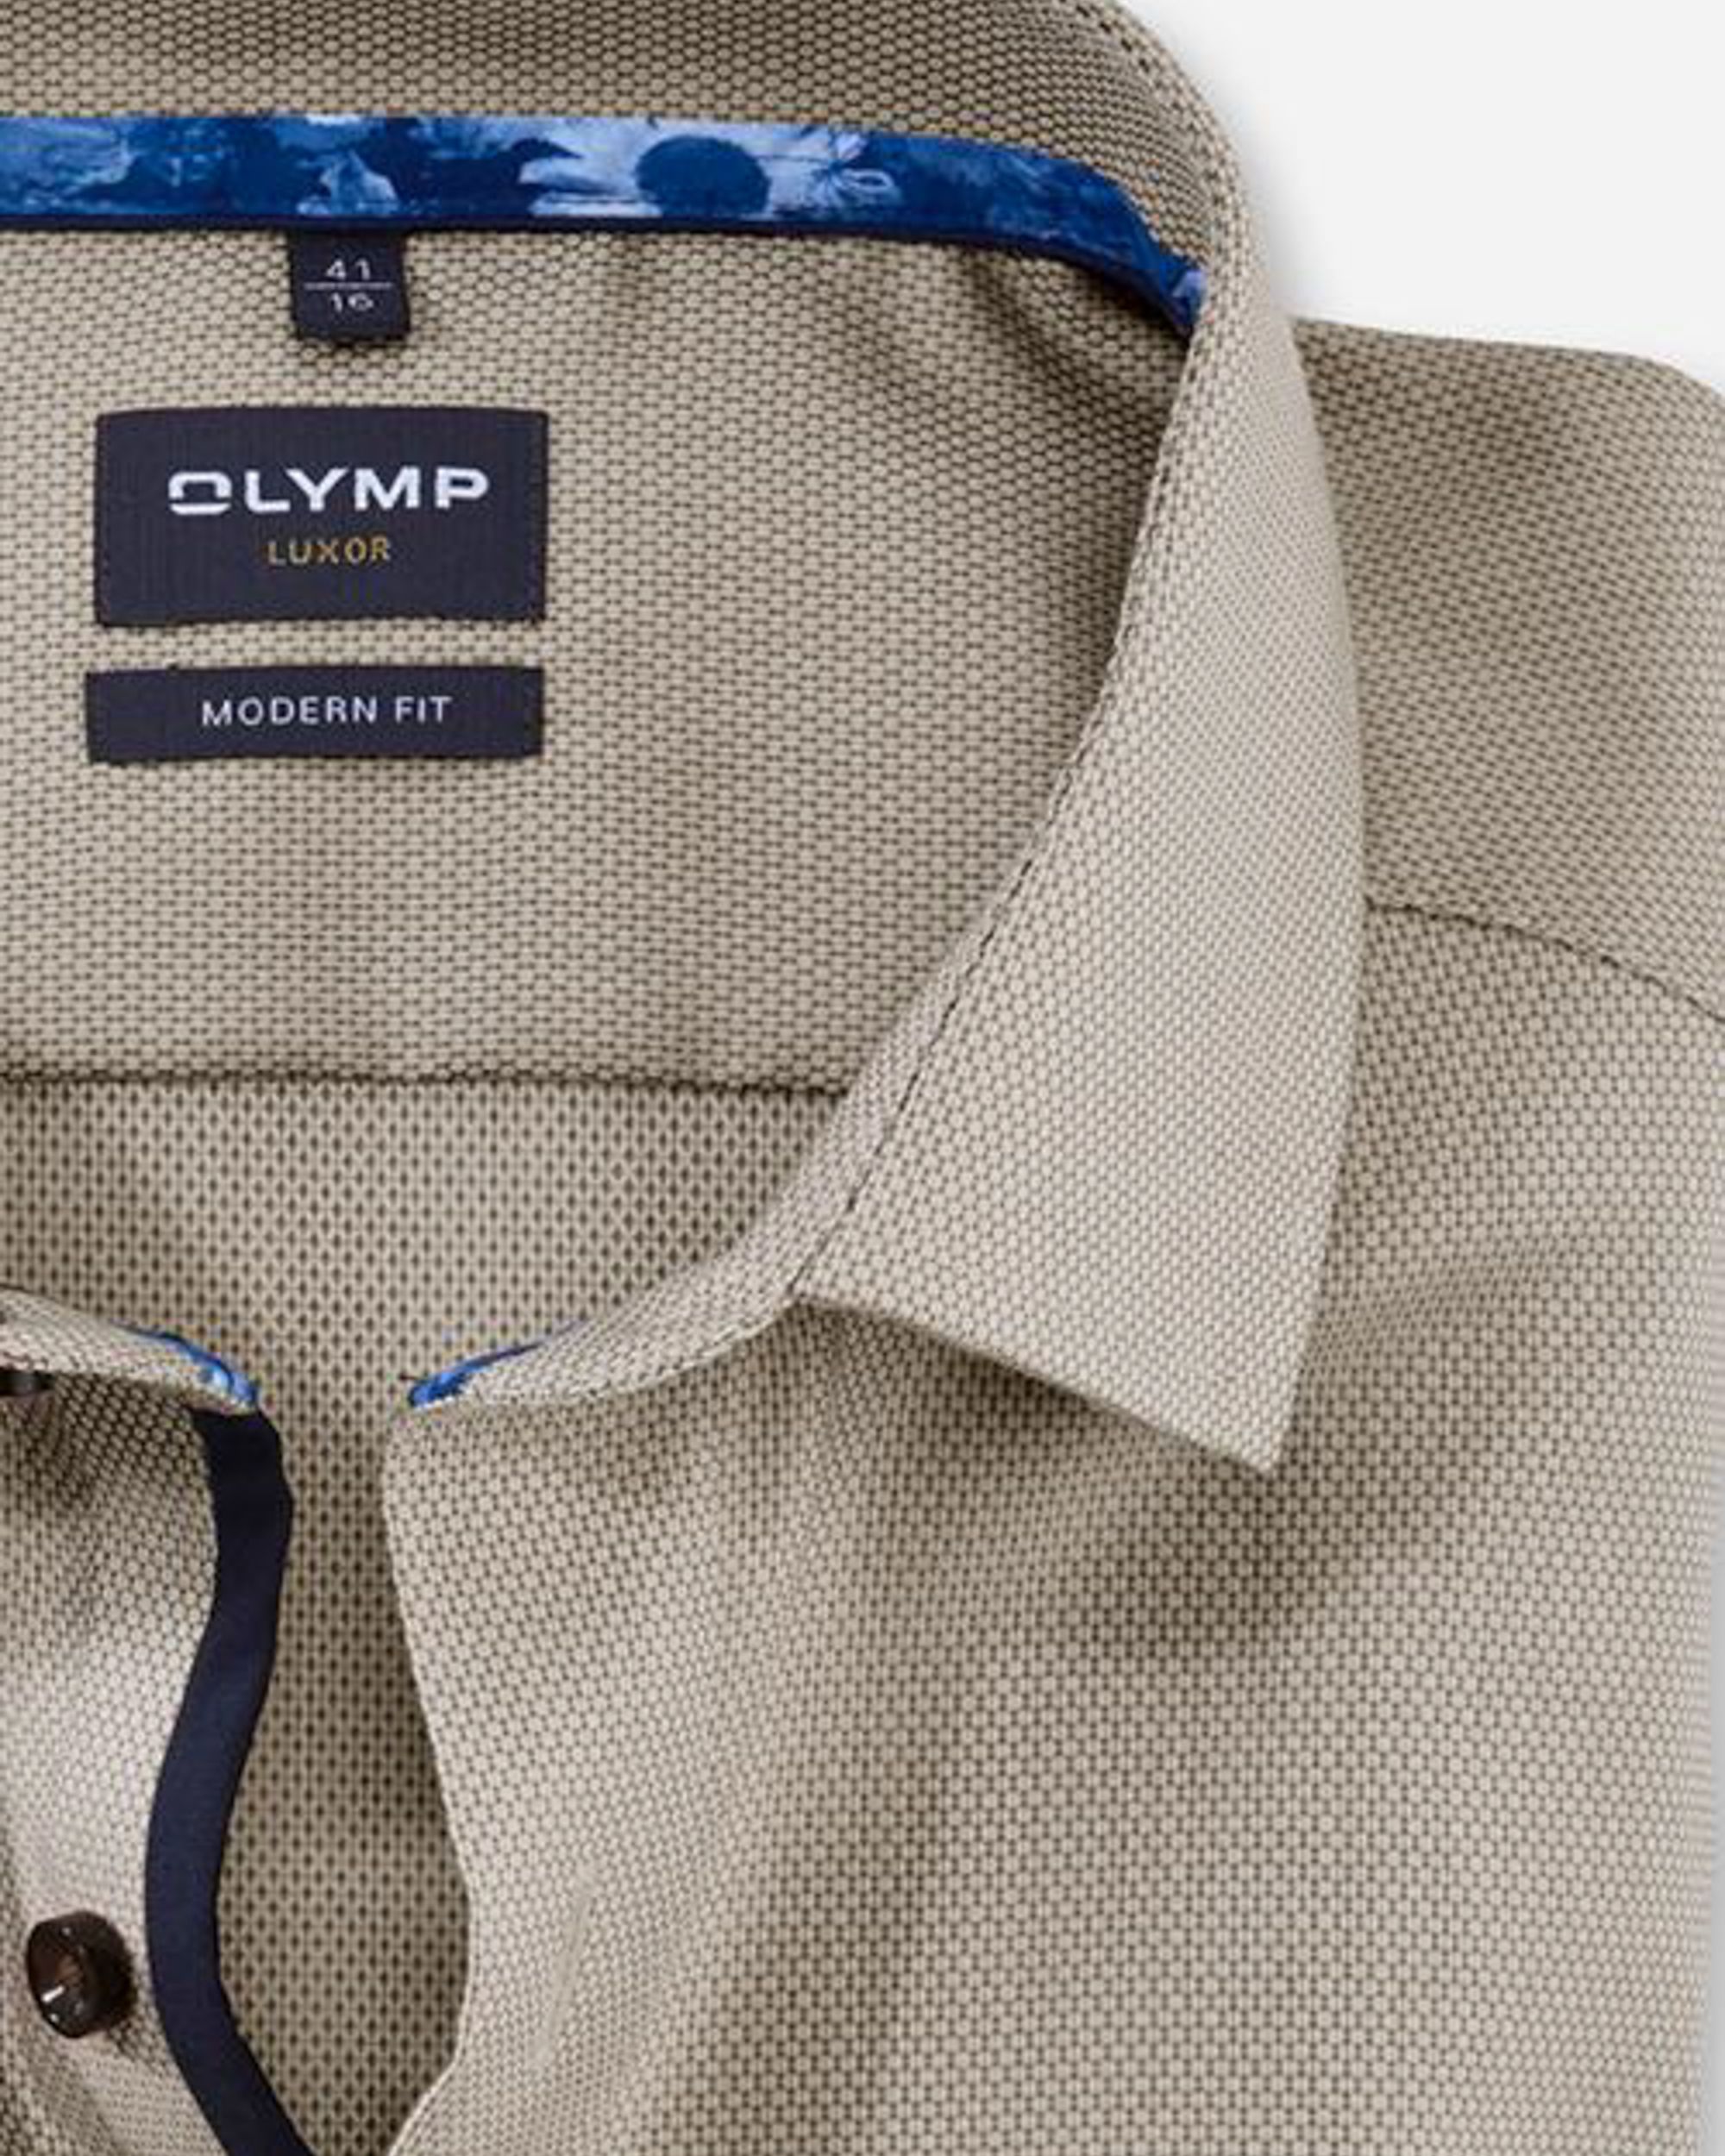 OLYMP Luxor Modern Fit Overhemd LM Beige 084284-001-47